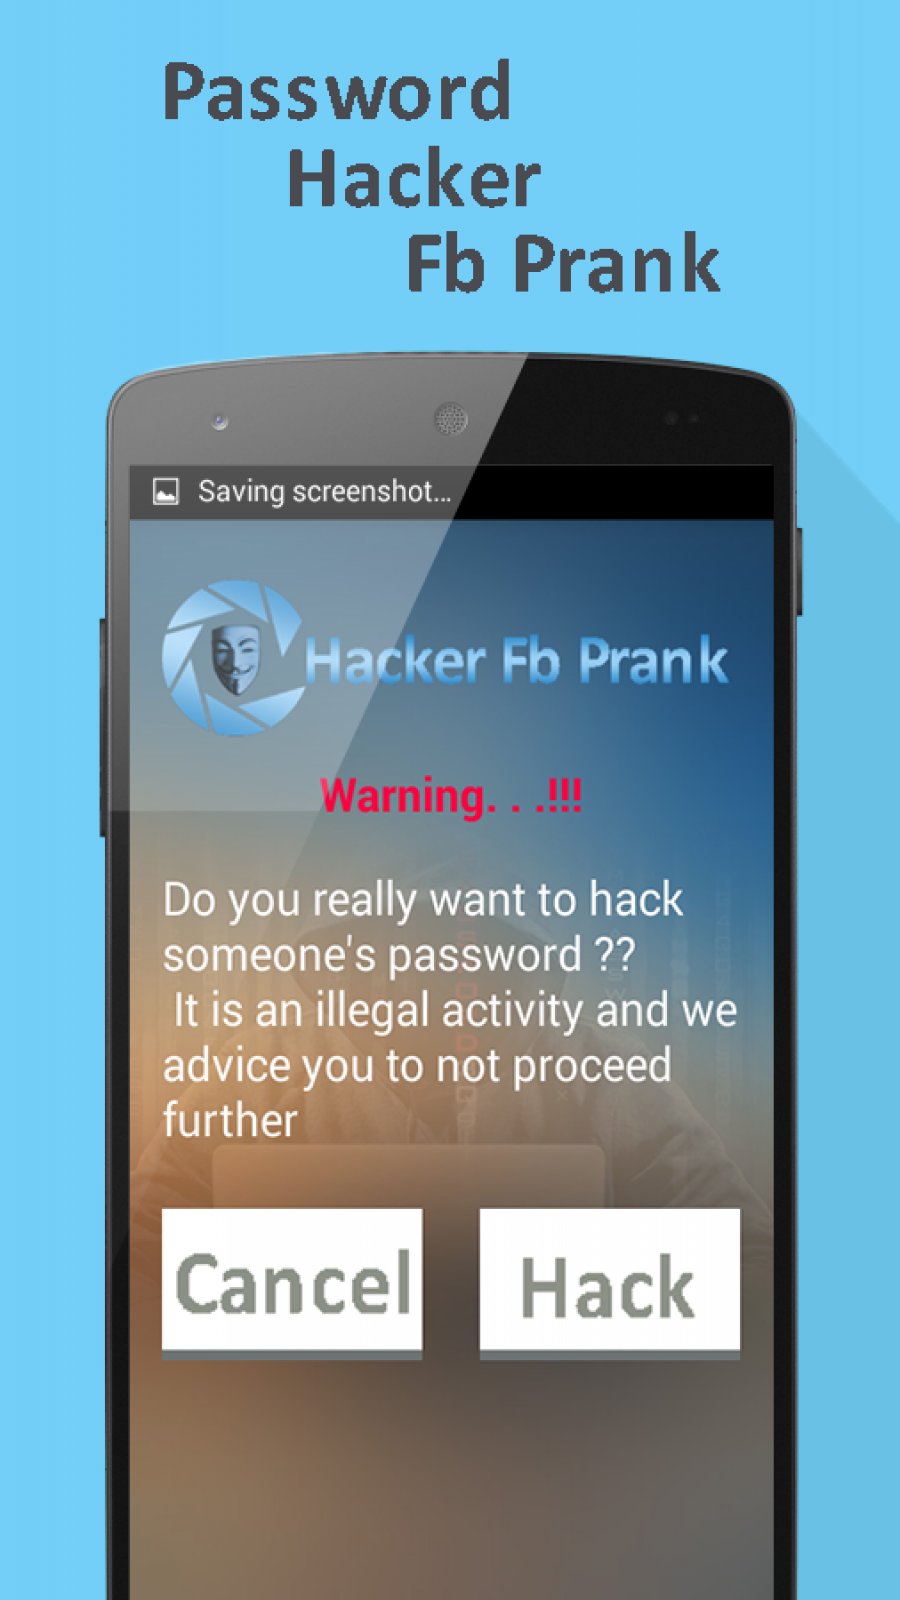 fb hacker prank code for vb 2010